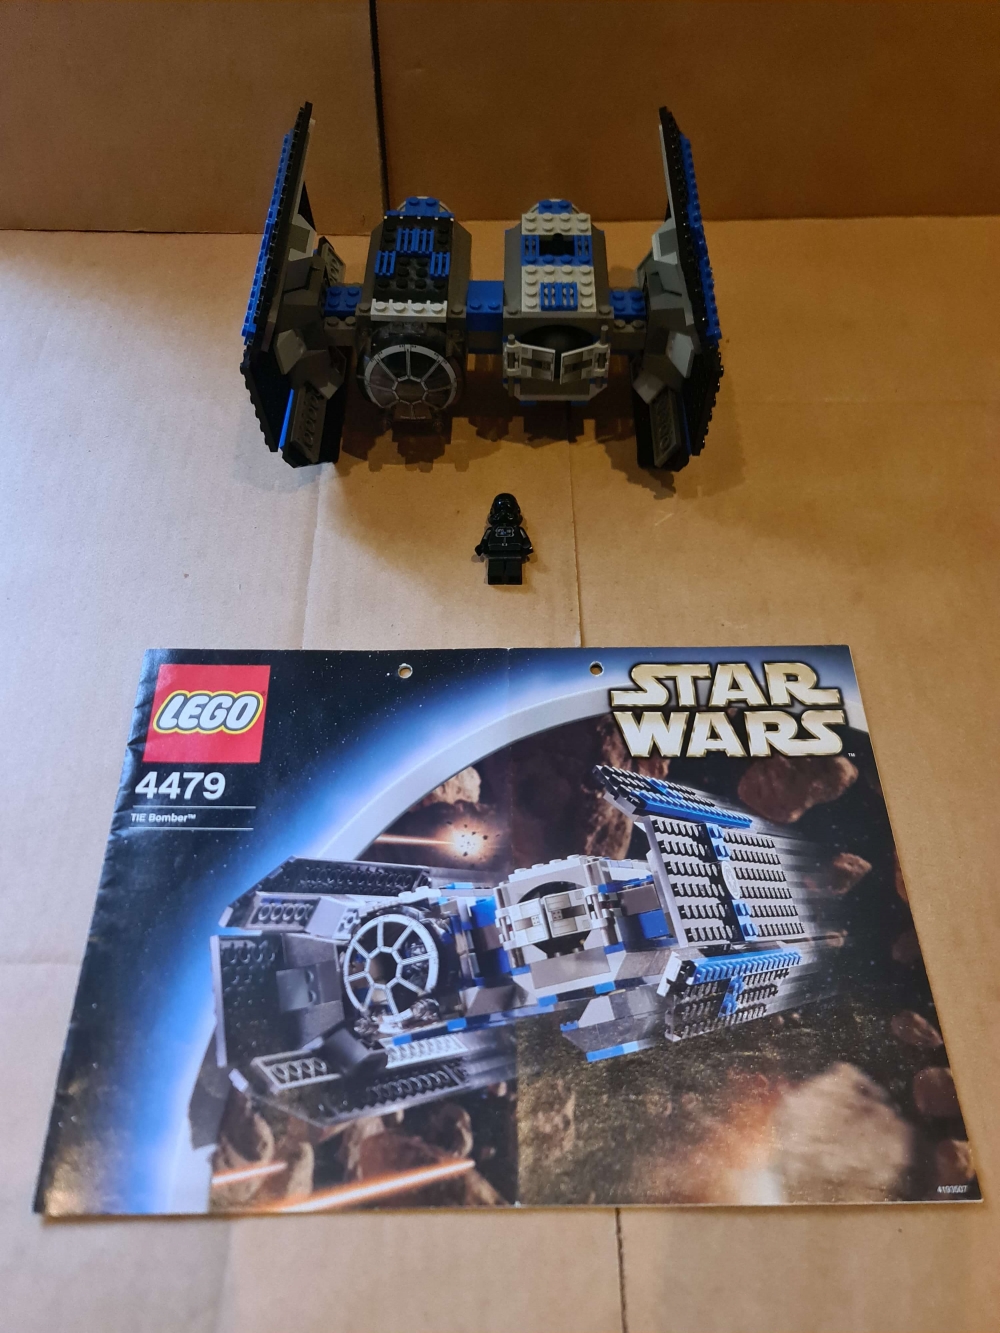 Sett 4479 fra Lego Star Wars : Episode 4/5/6 serien,
Flott sett under litt støv.
Komplett med manual.